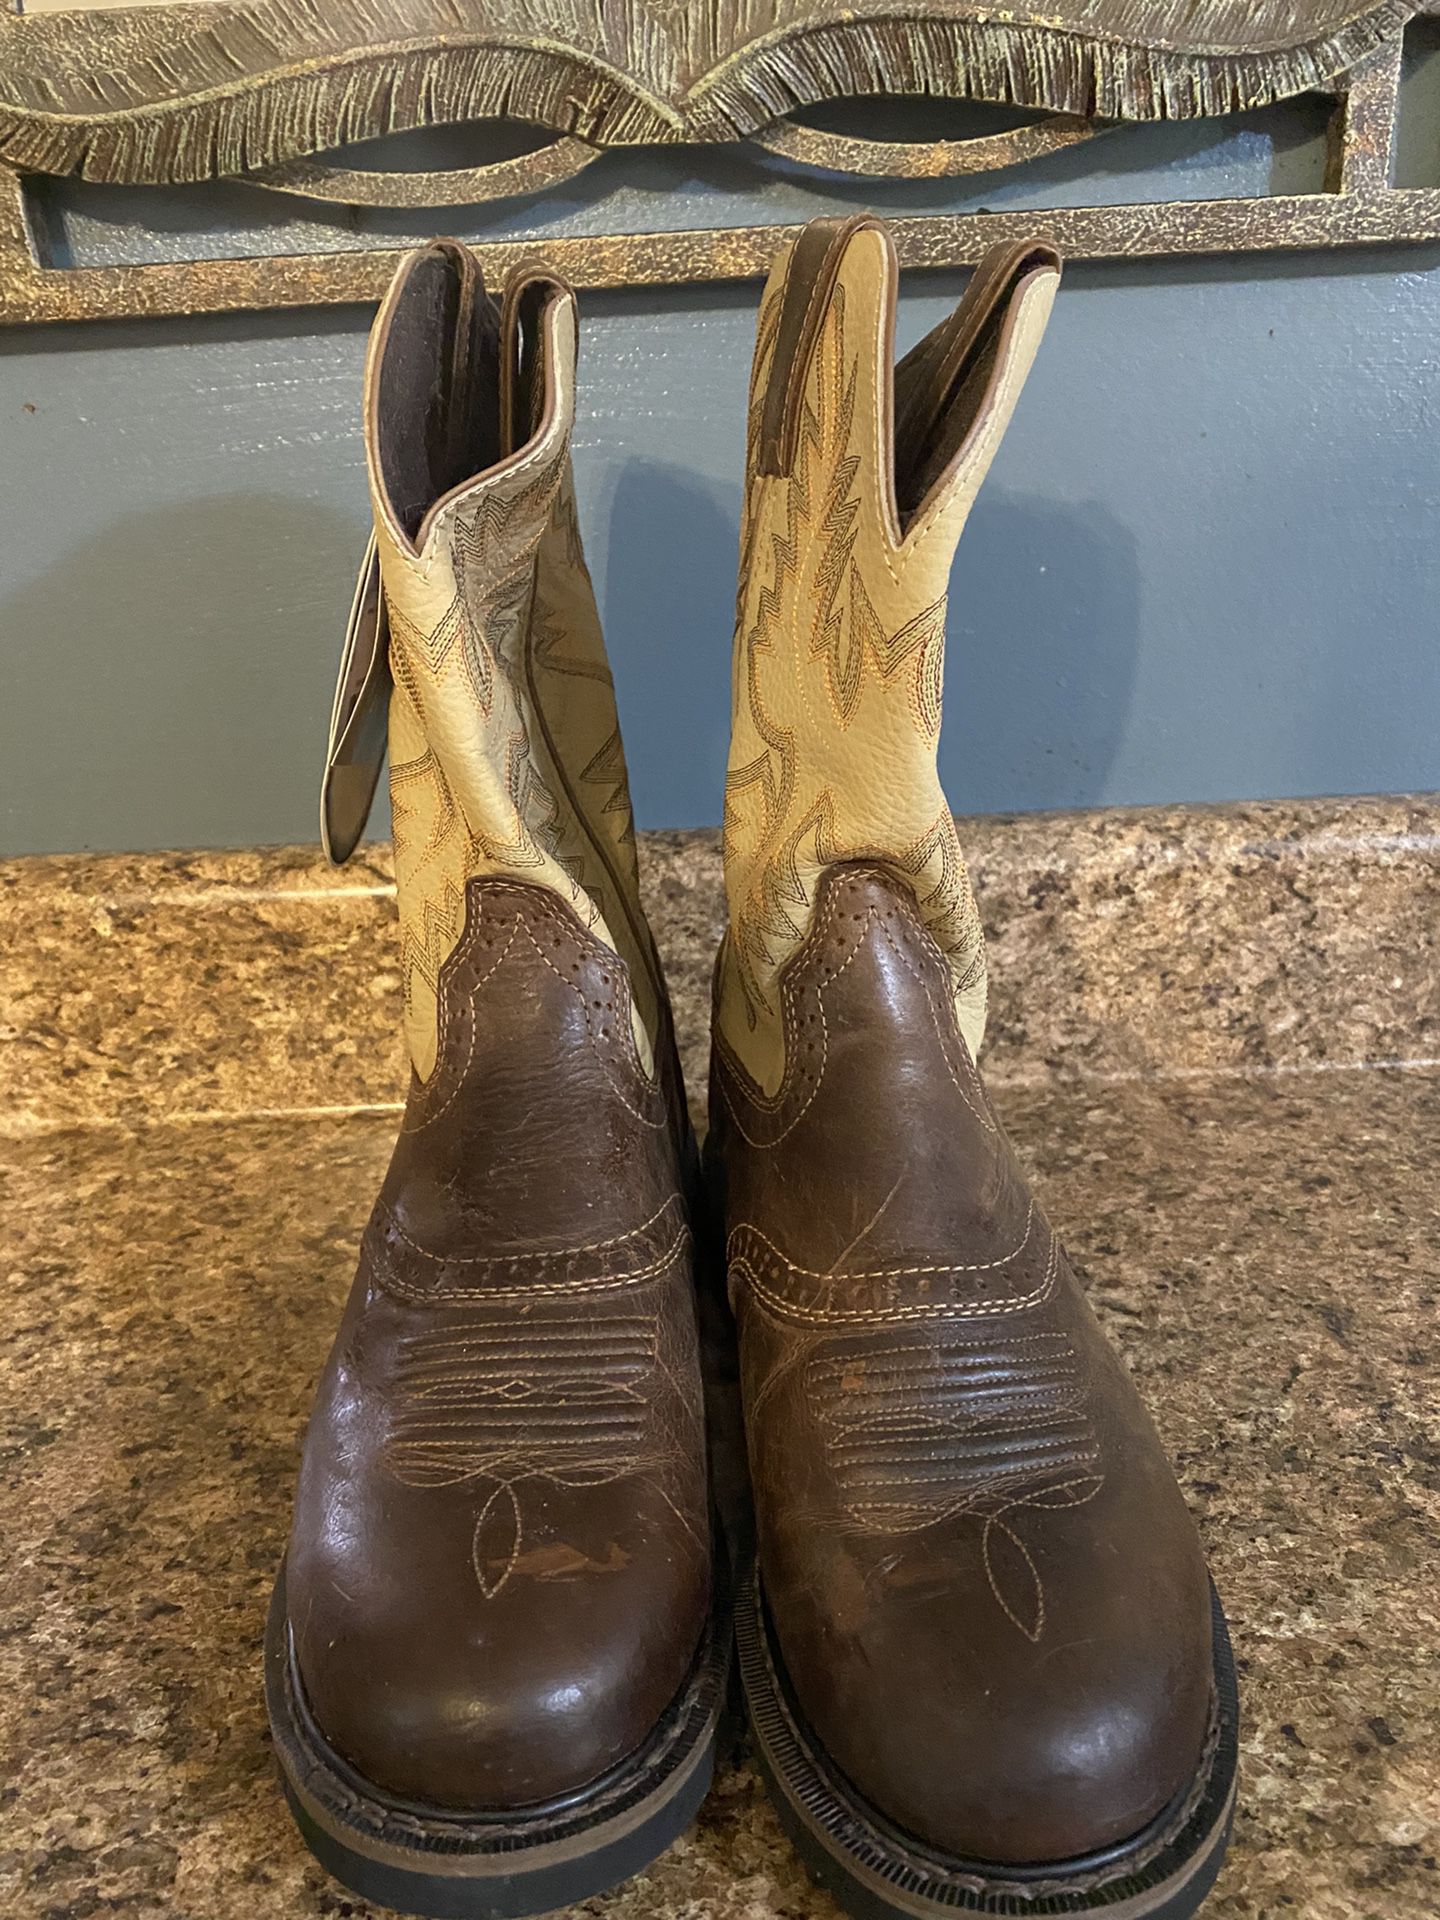 Justin Boots Original Work Boots 9.5 D NWT $50